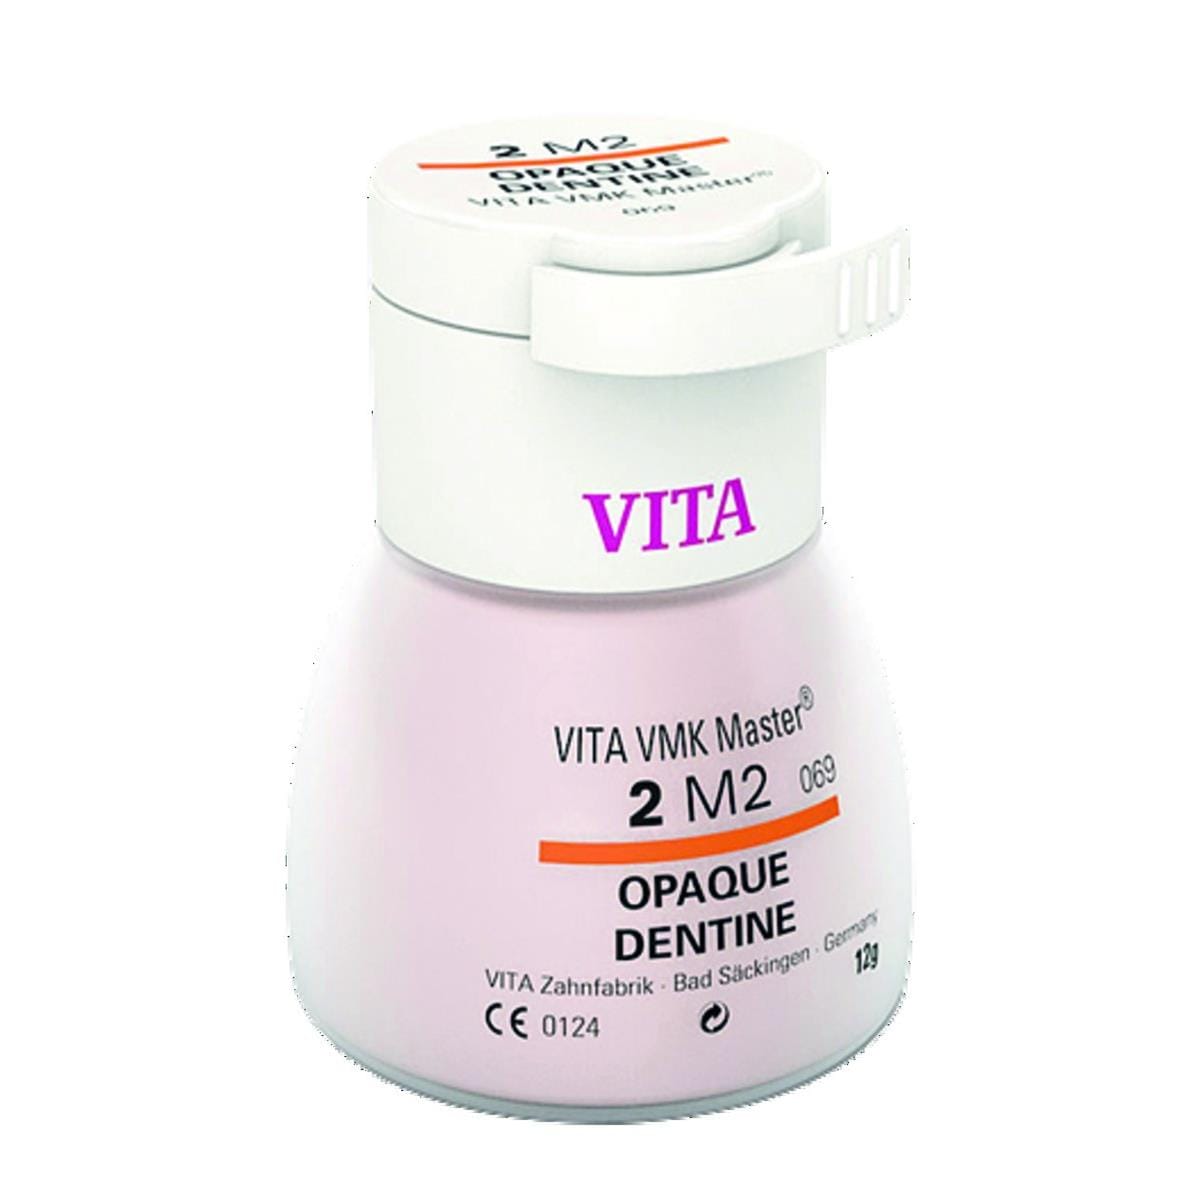 VMK Master VITA - Dentine Opaque - 0M2 - Le flacon de 12 g